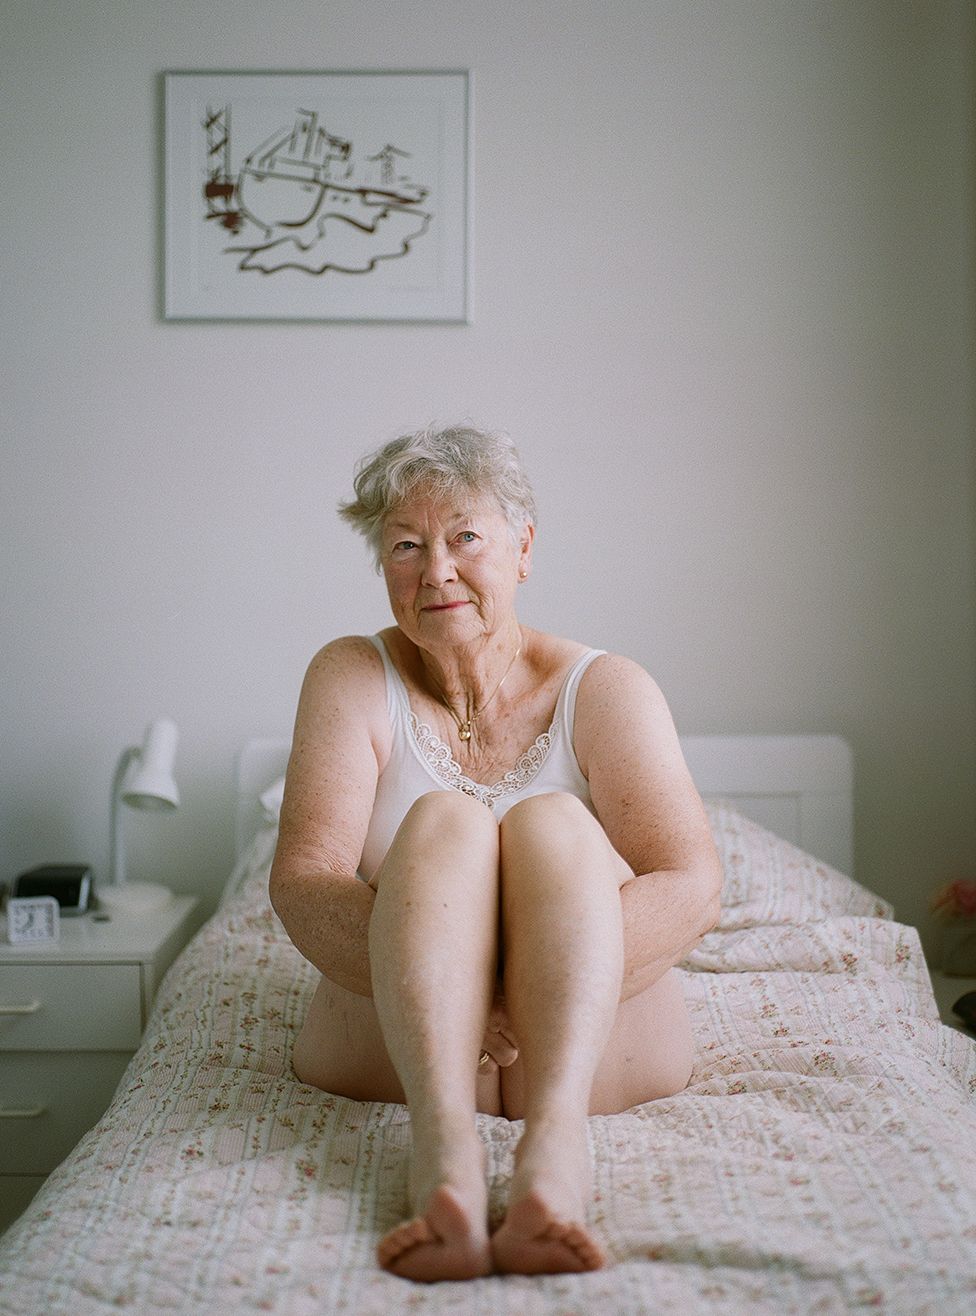 Обнаженная старая женщина – домашняя фотосессия 